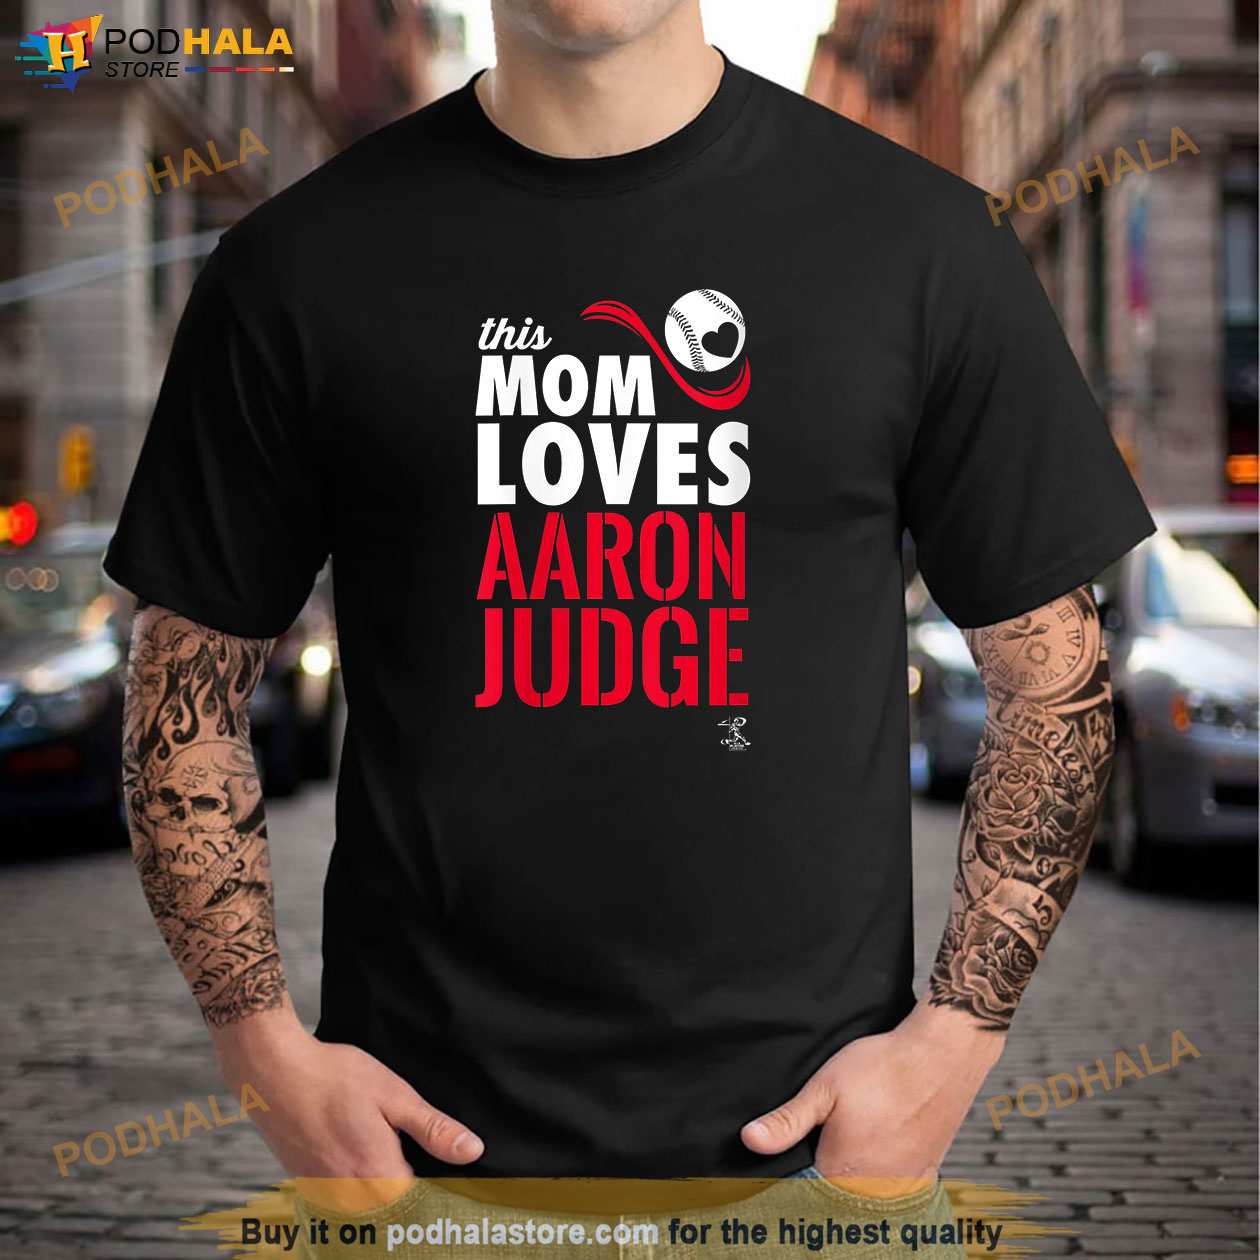 womens aaron judge shirt